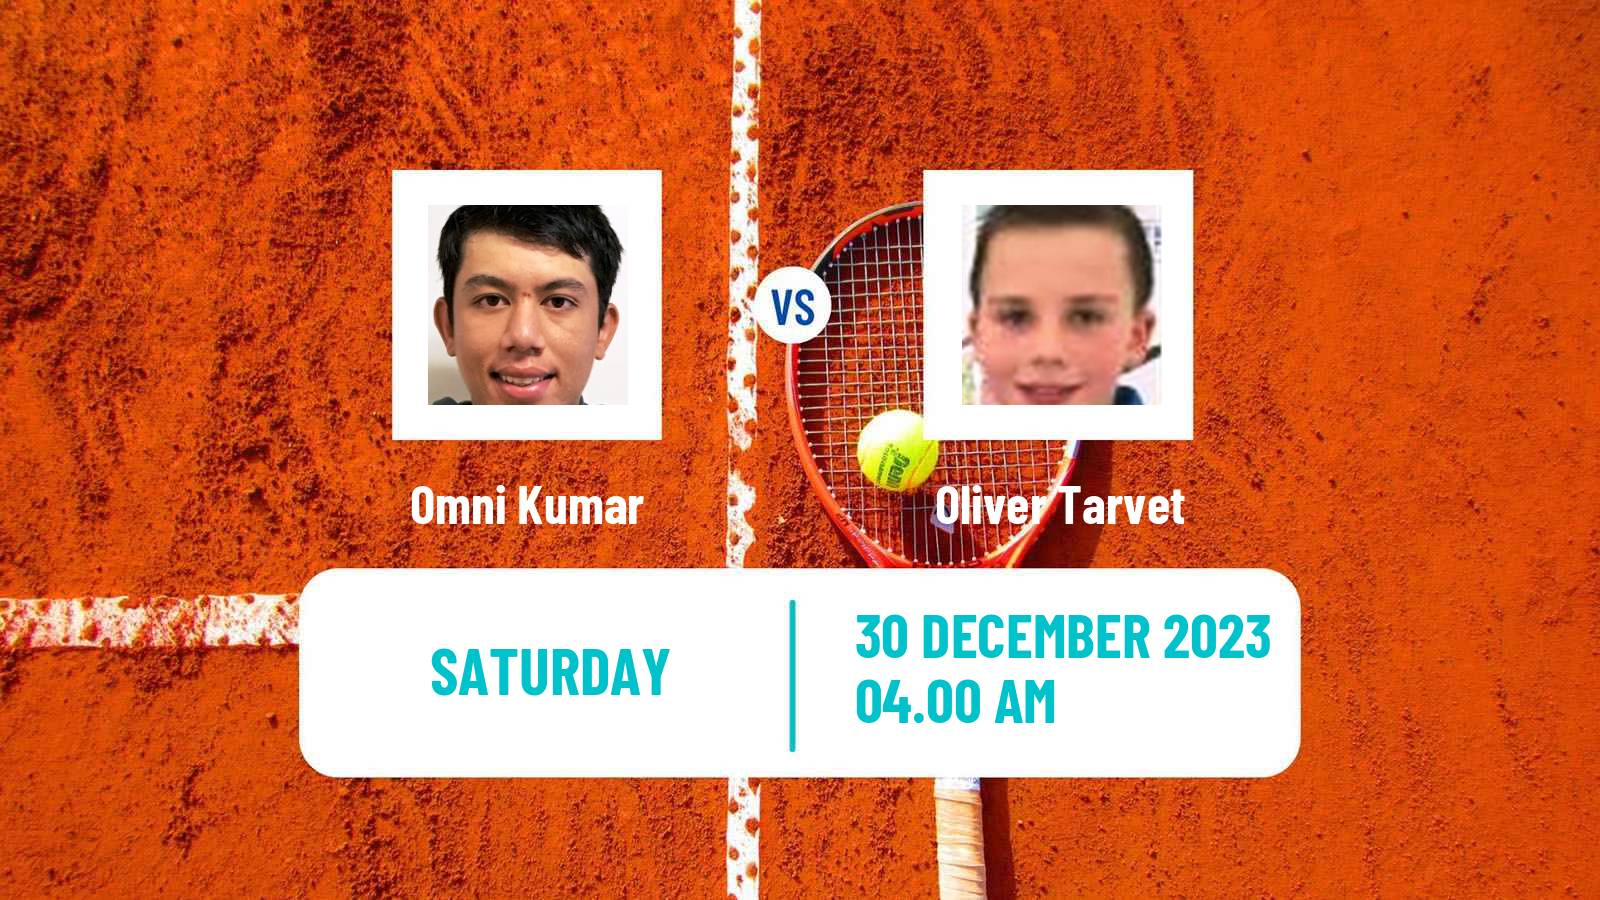 Tennis ITF M15 Monastir 52 Men Omni Kumar - Oliver Tarvet